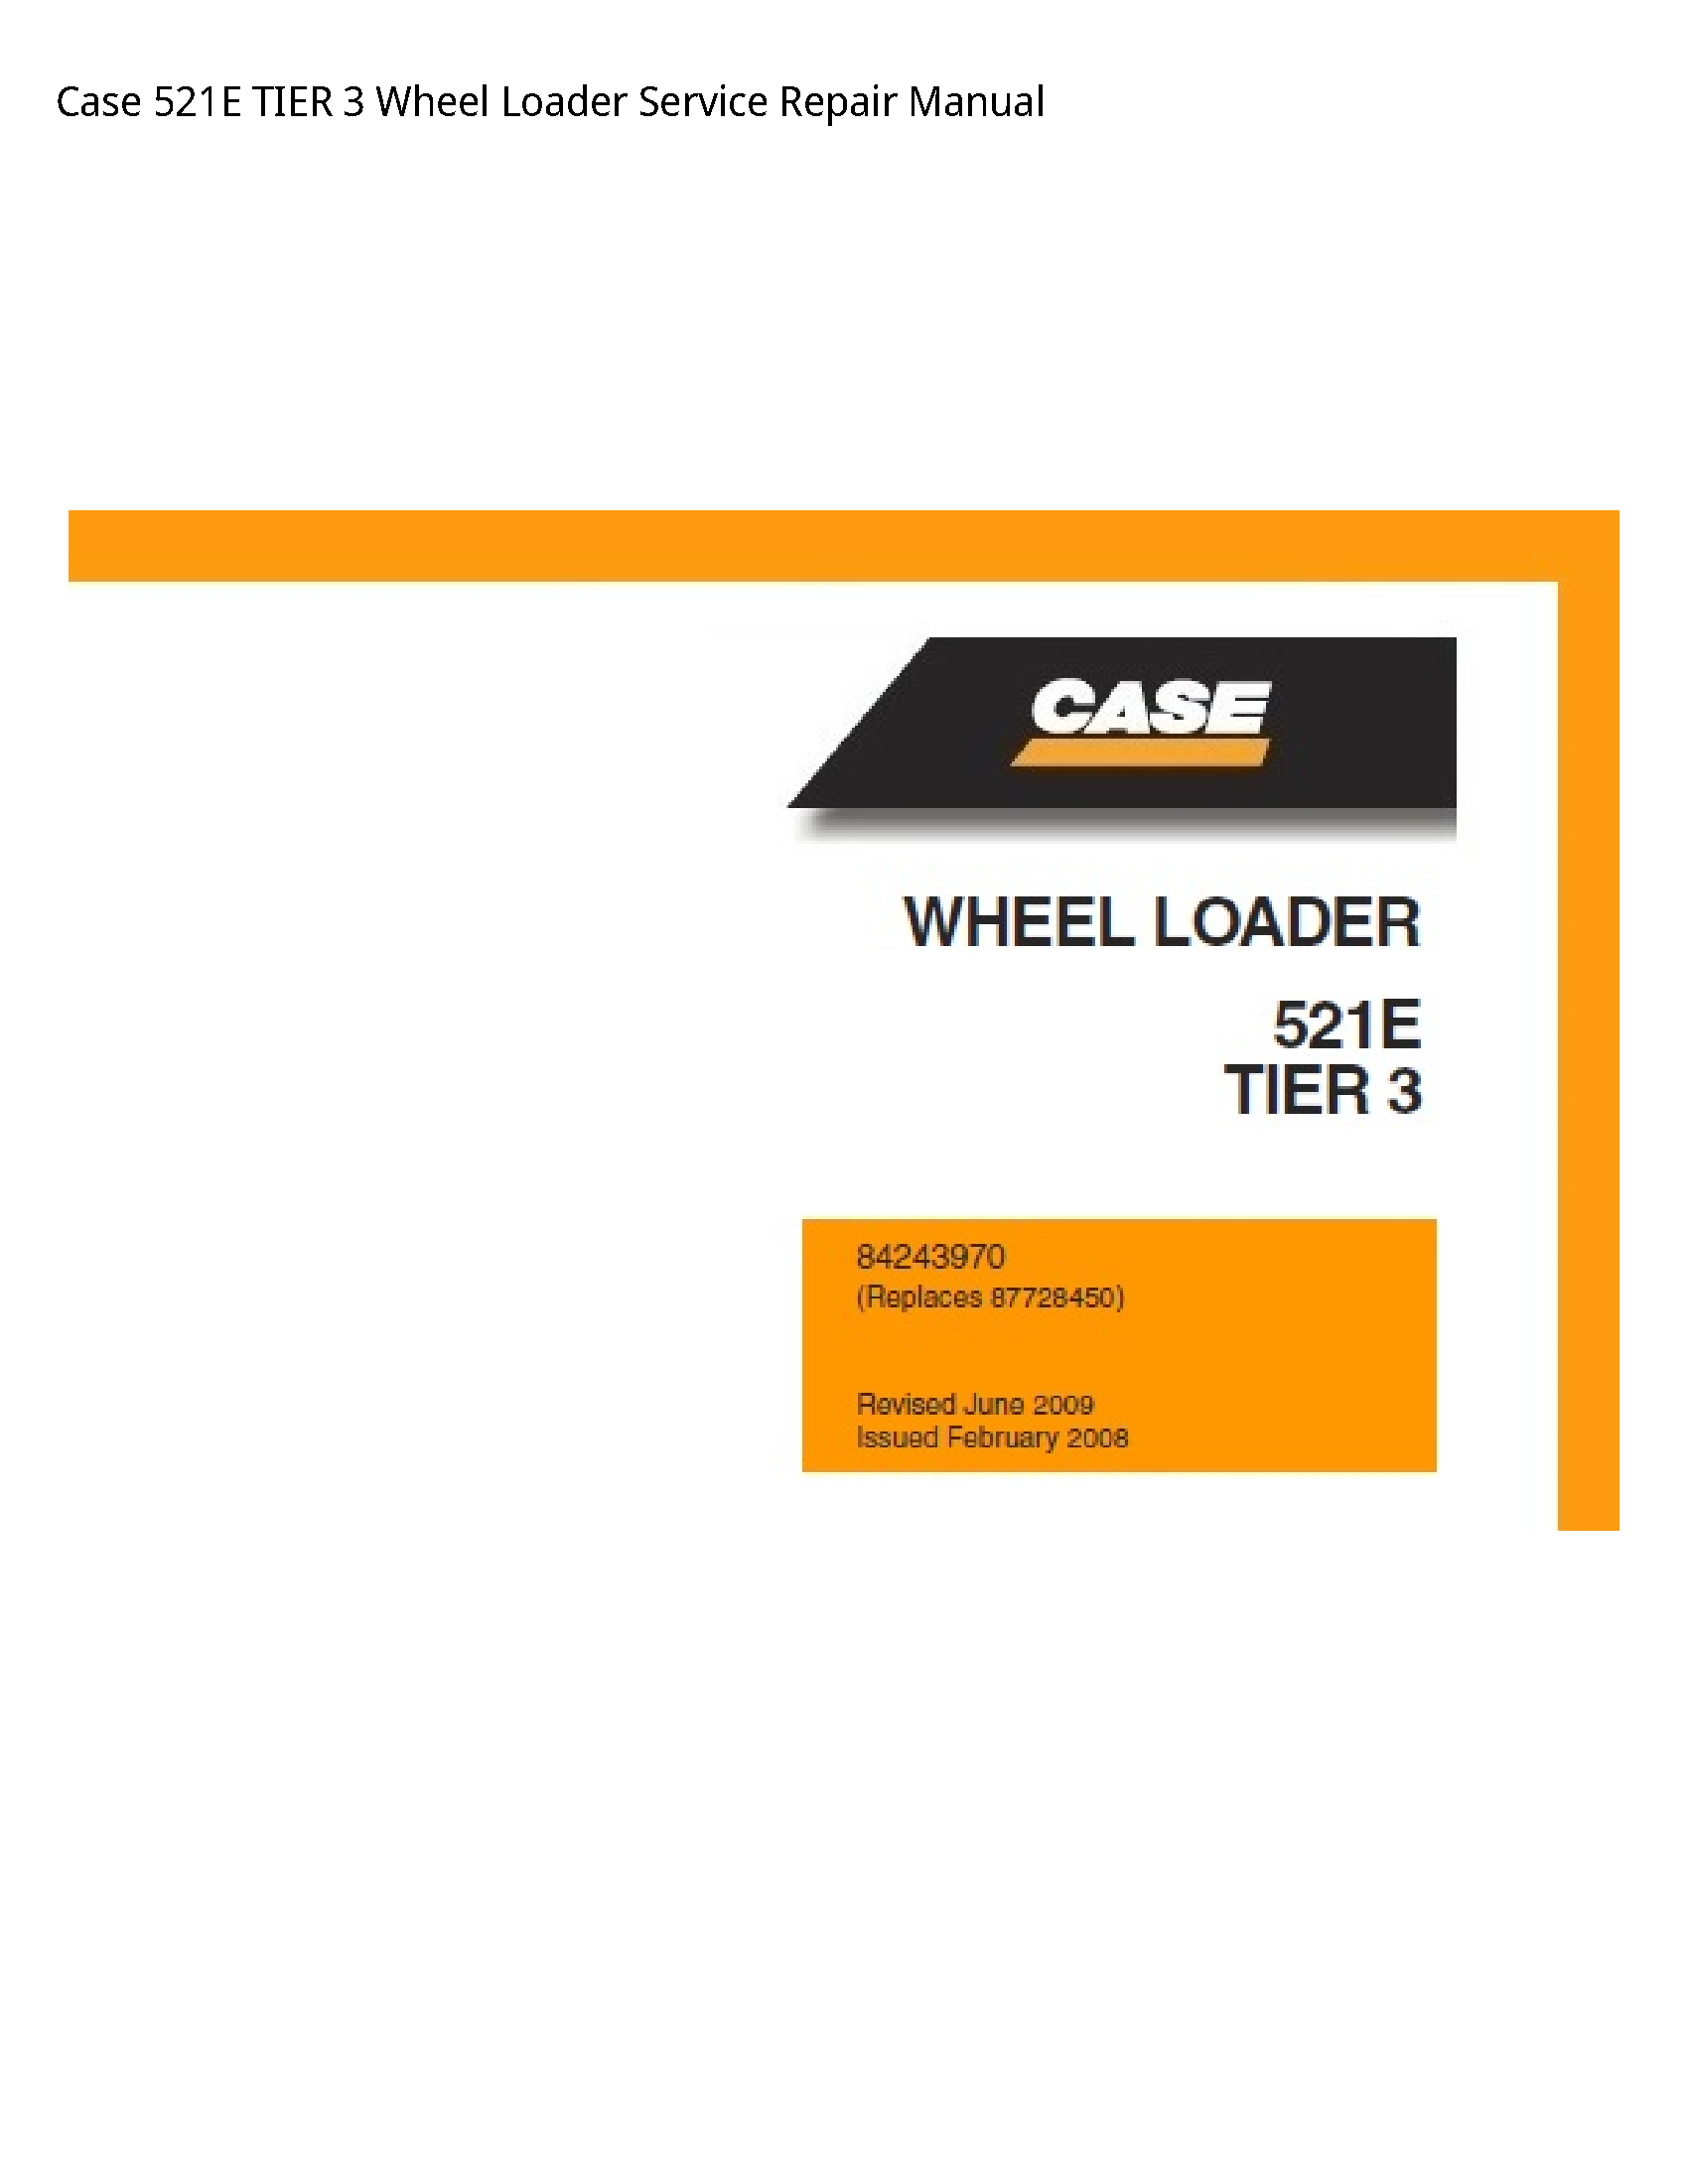 Case/Case IH 521E TIER Wheel Loader manual